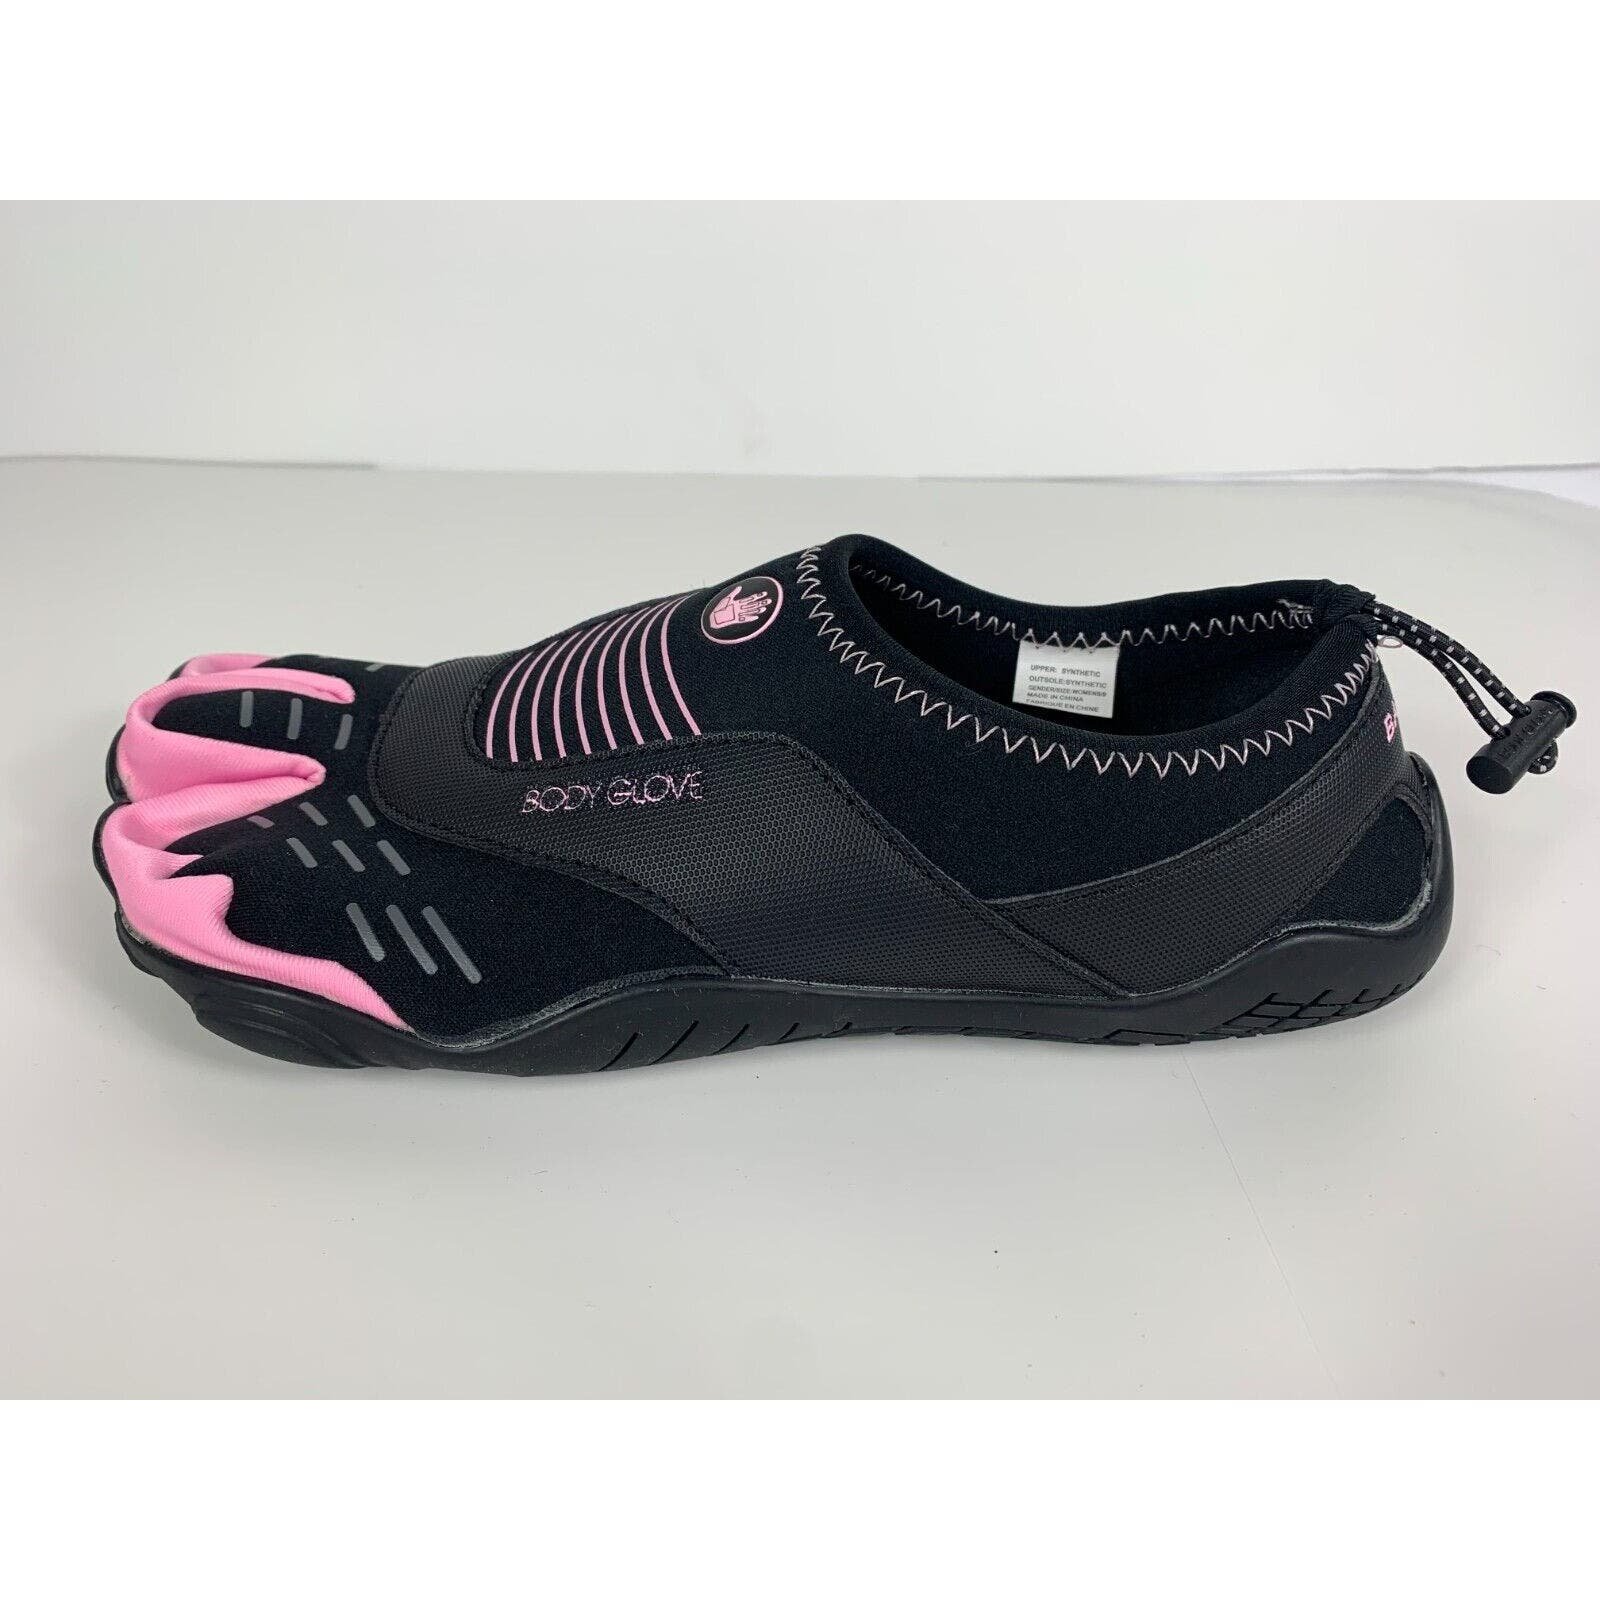 Body Glove 3T Barefoot Womens Size 9 Cinch Water Shoes Black Pink Minimalist be4MiOImZ